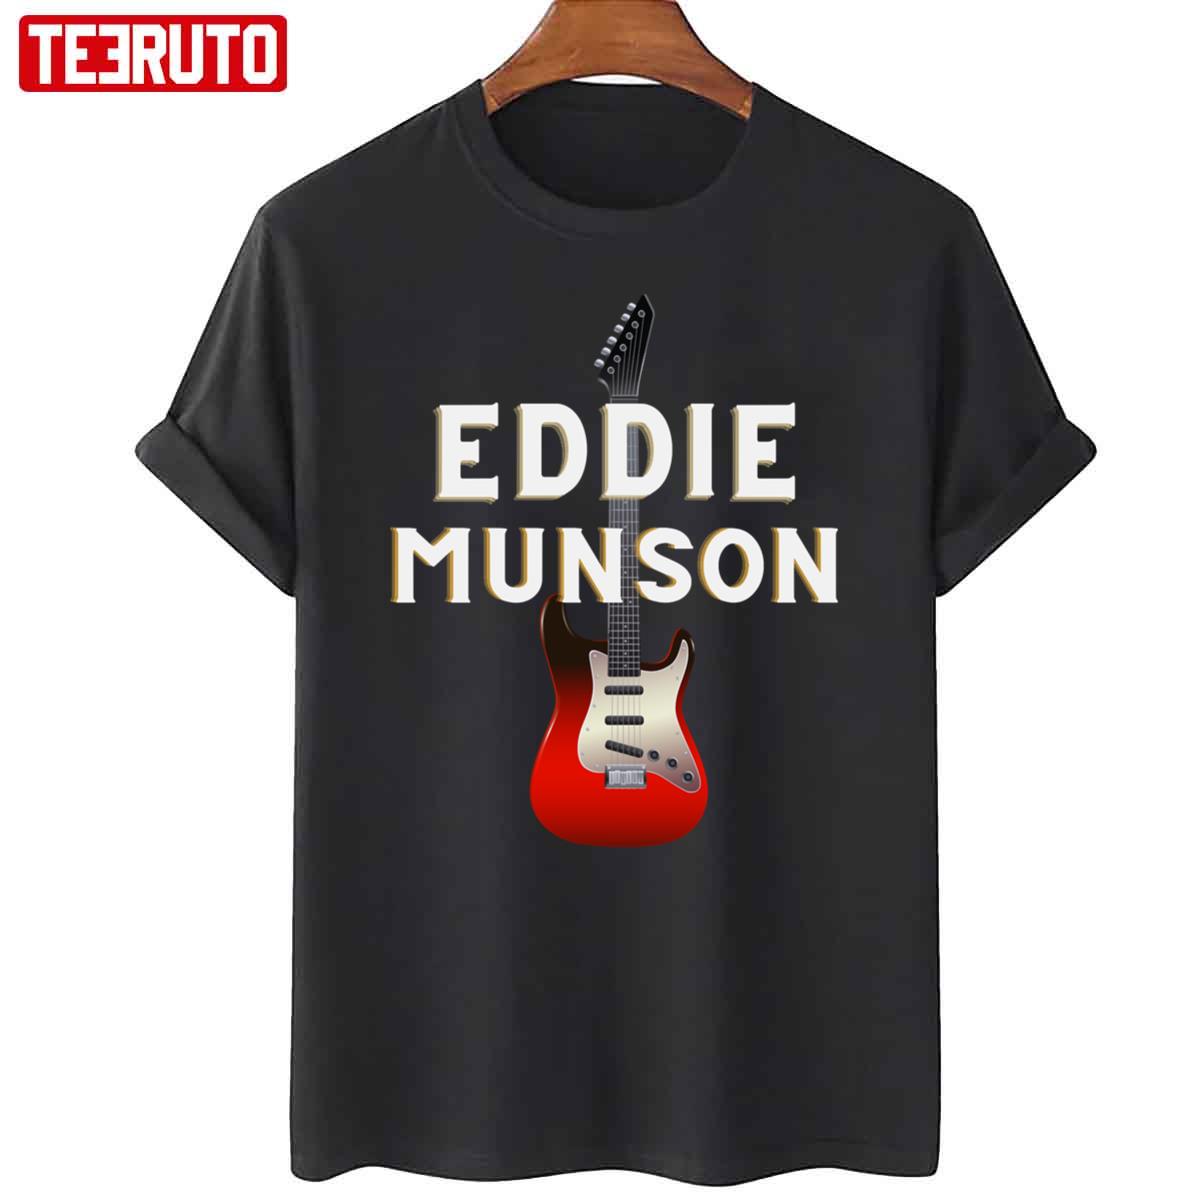 Eddie Munson With His Guitar Design Unisex T-Shirt